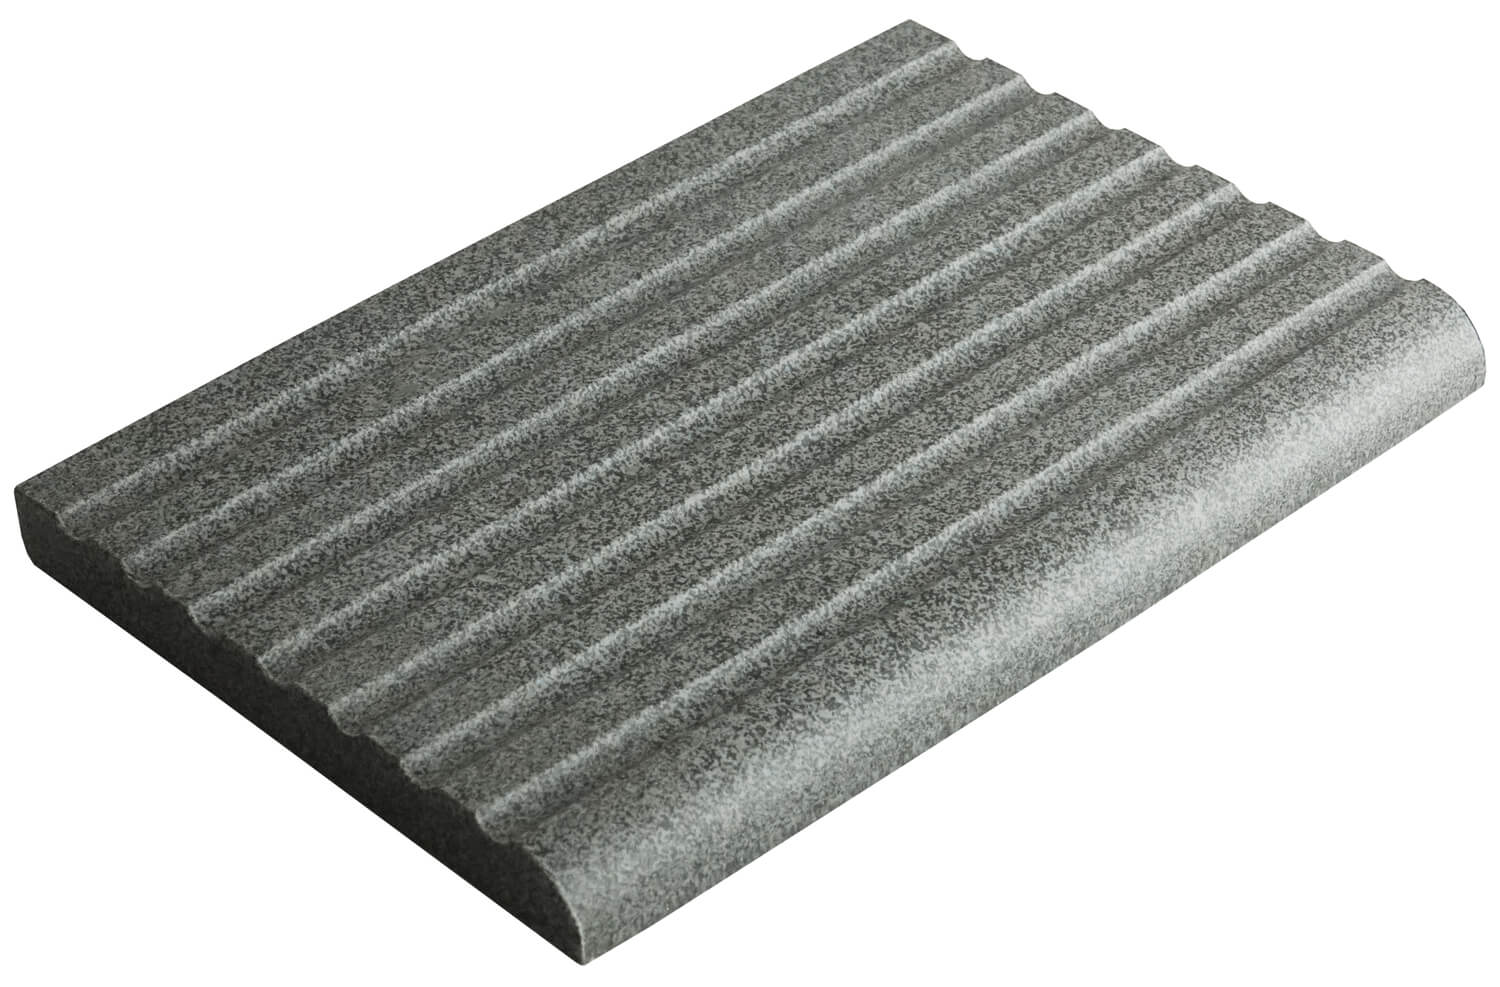 Dorset Woolliscroft Dark Grey Step Tread Slip Resistant Quarry Tile 148x100mm